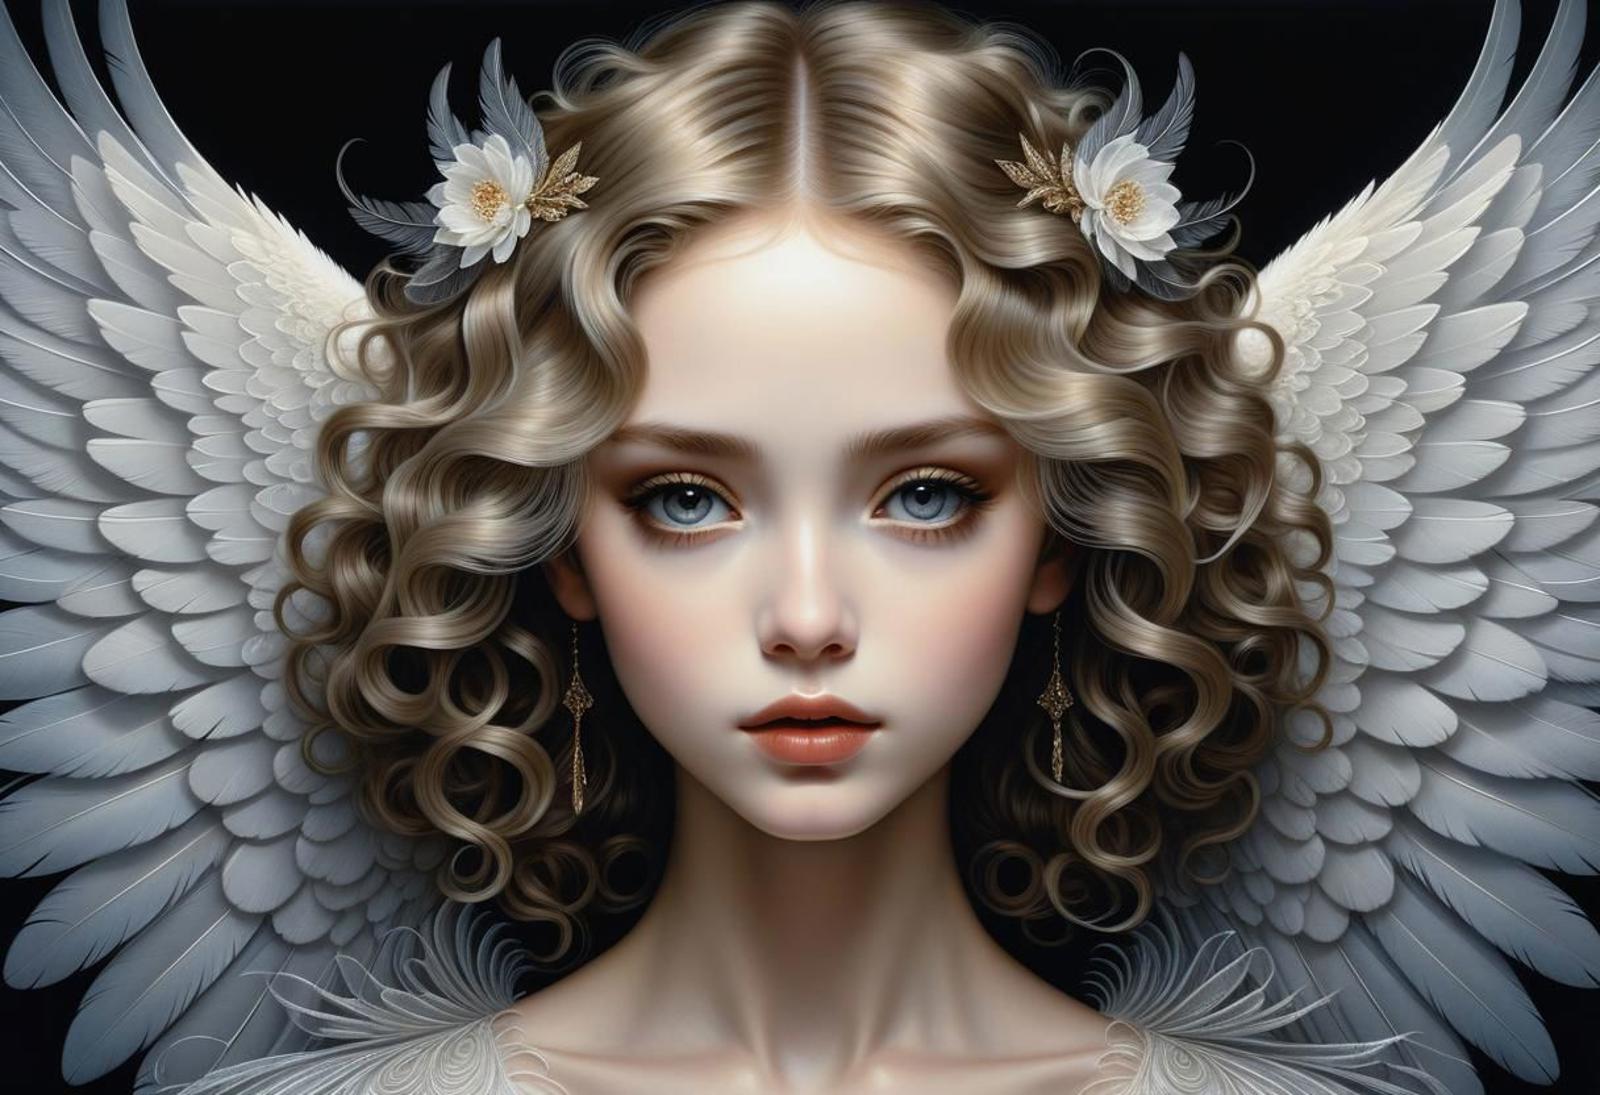 SDXL Angelic/Demonic image by kyttyn888960